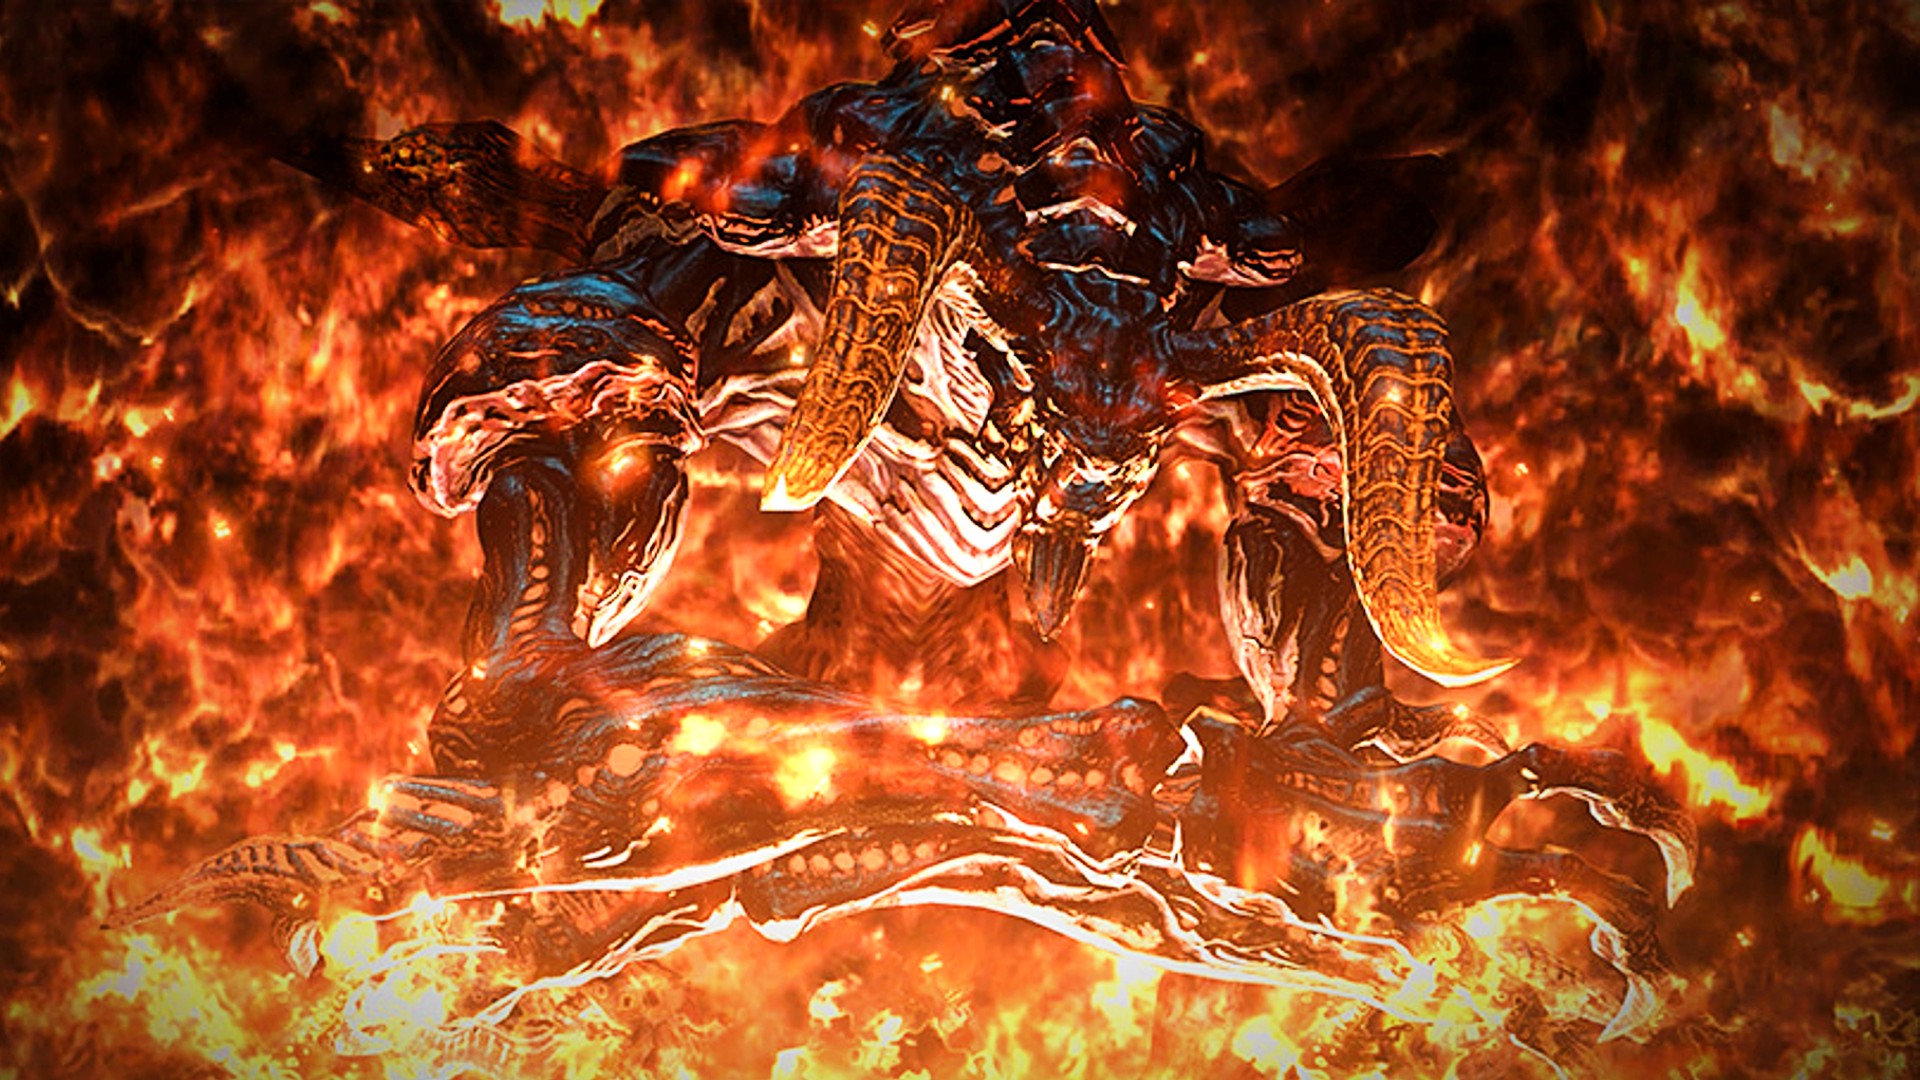 Final Fantasy XVI Producer Sets Social Media On Fire: “I wish